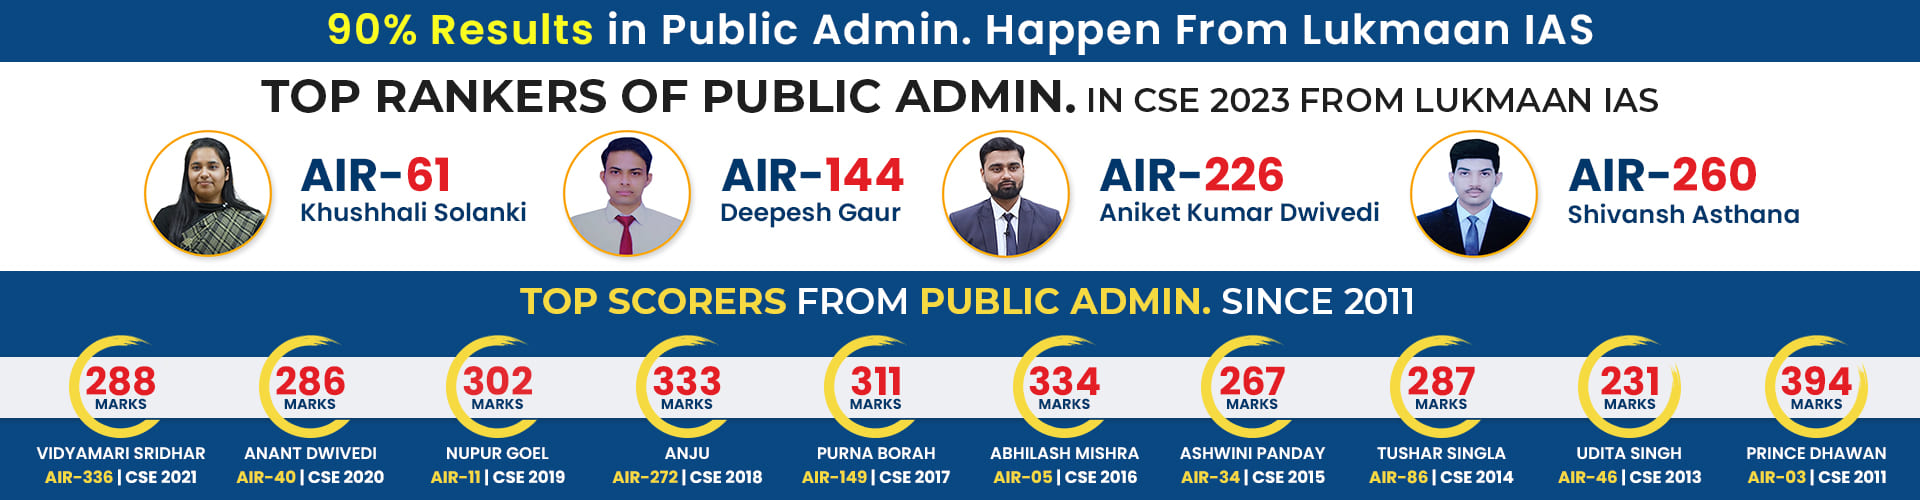 public admin._